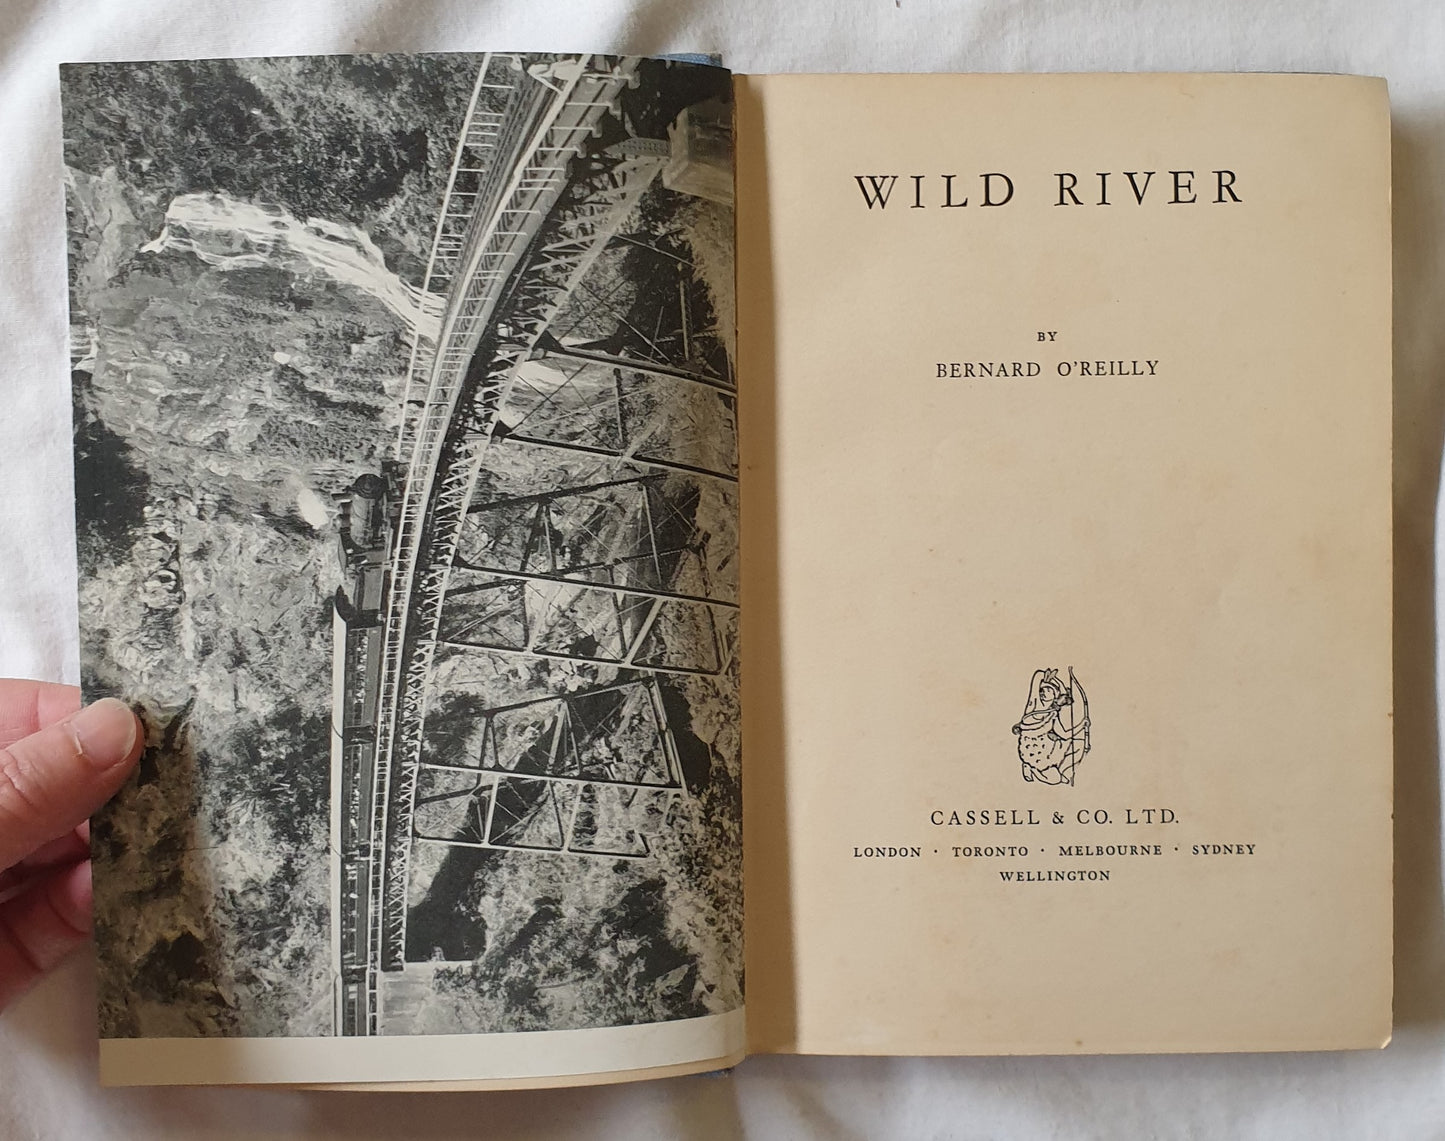 Wild River by Bernard O'Reilly